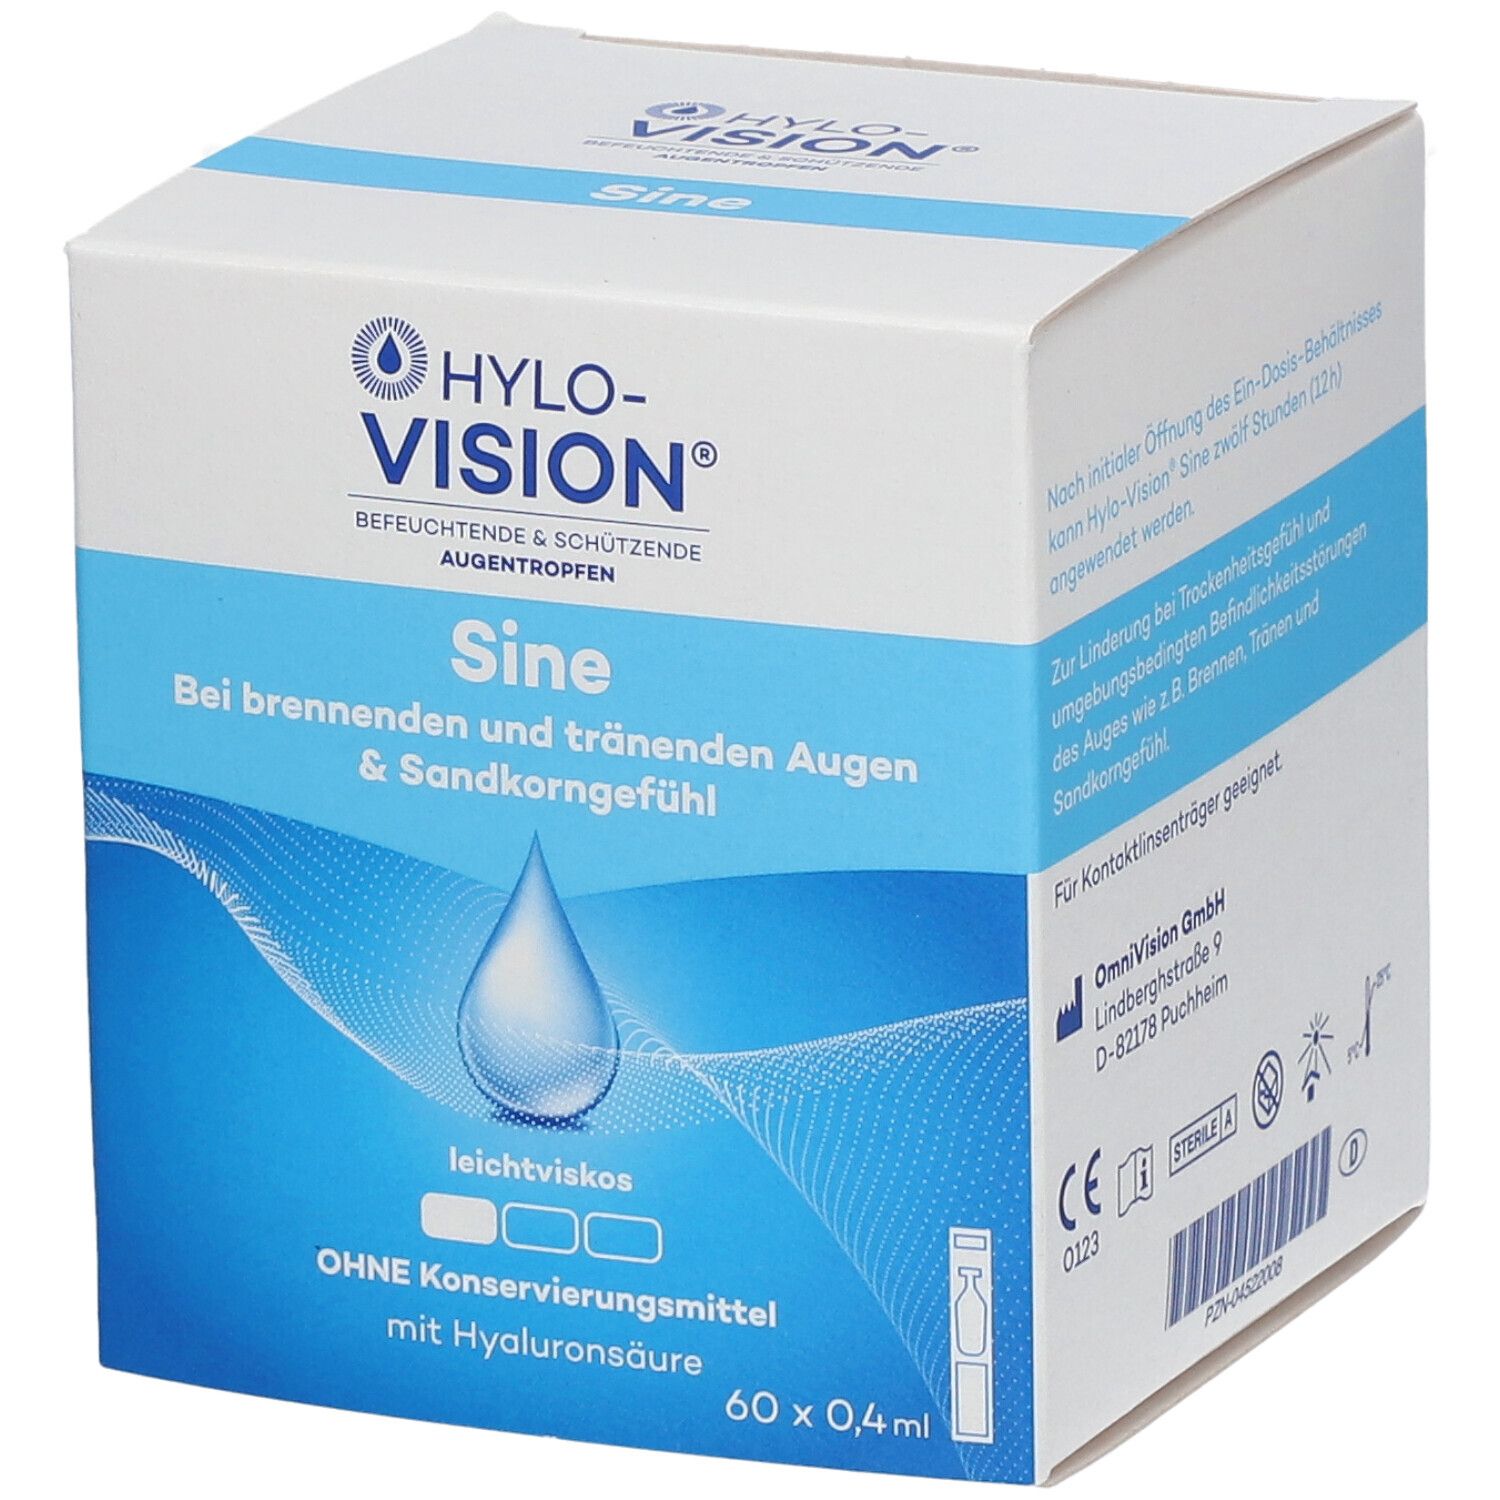 Hylo-Vision® Sine